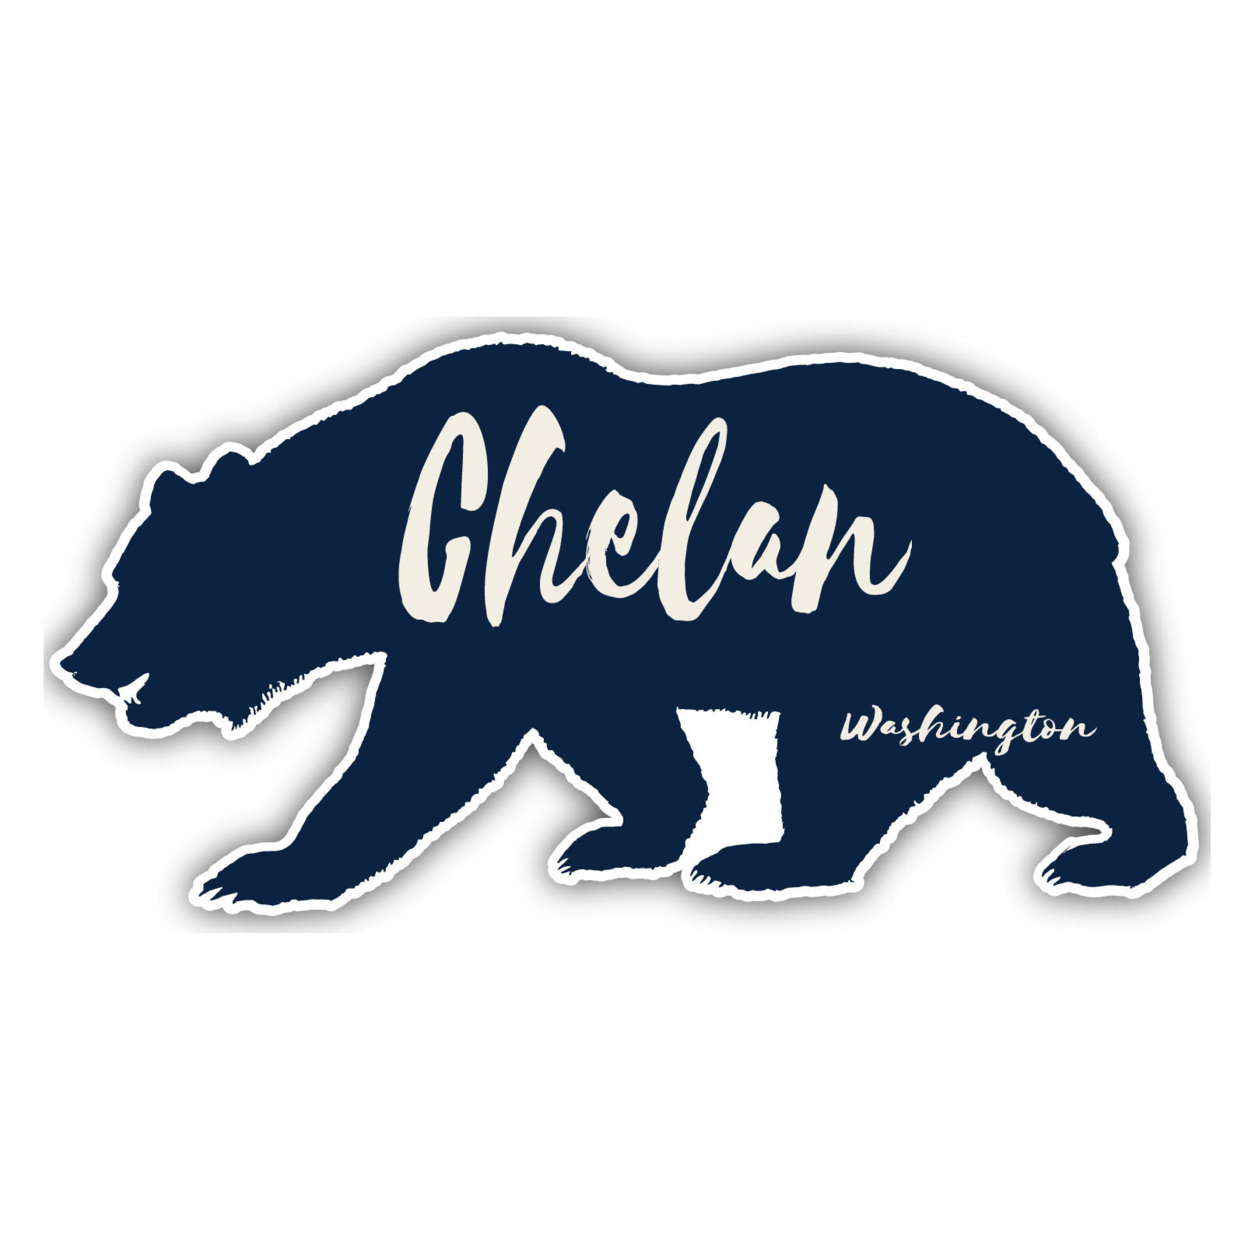 Chelan Washington Souvenir Decorative Stickers (Choose Theme And Size) - 4-Pack, 6-Inch, Camp Life